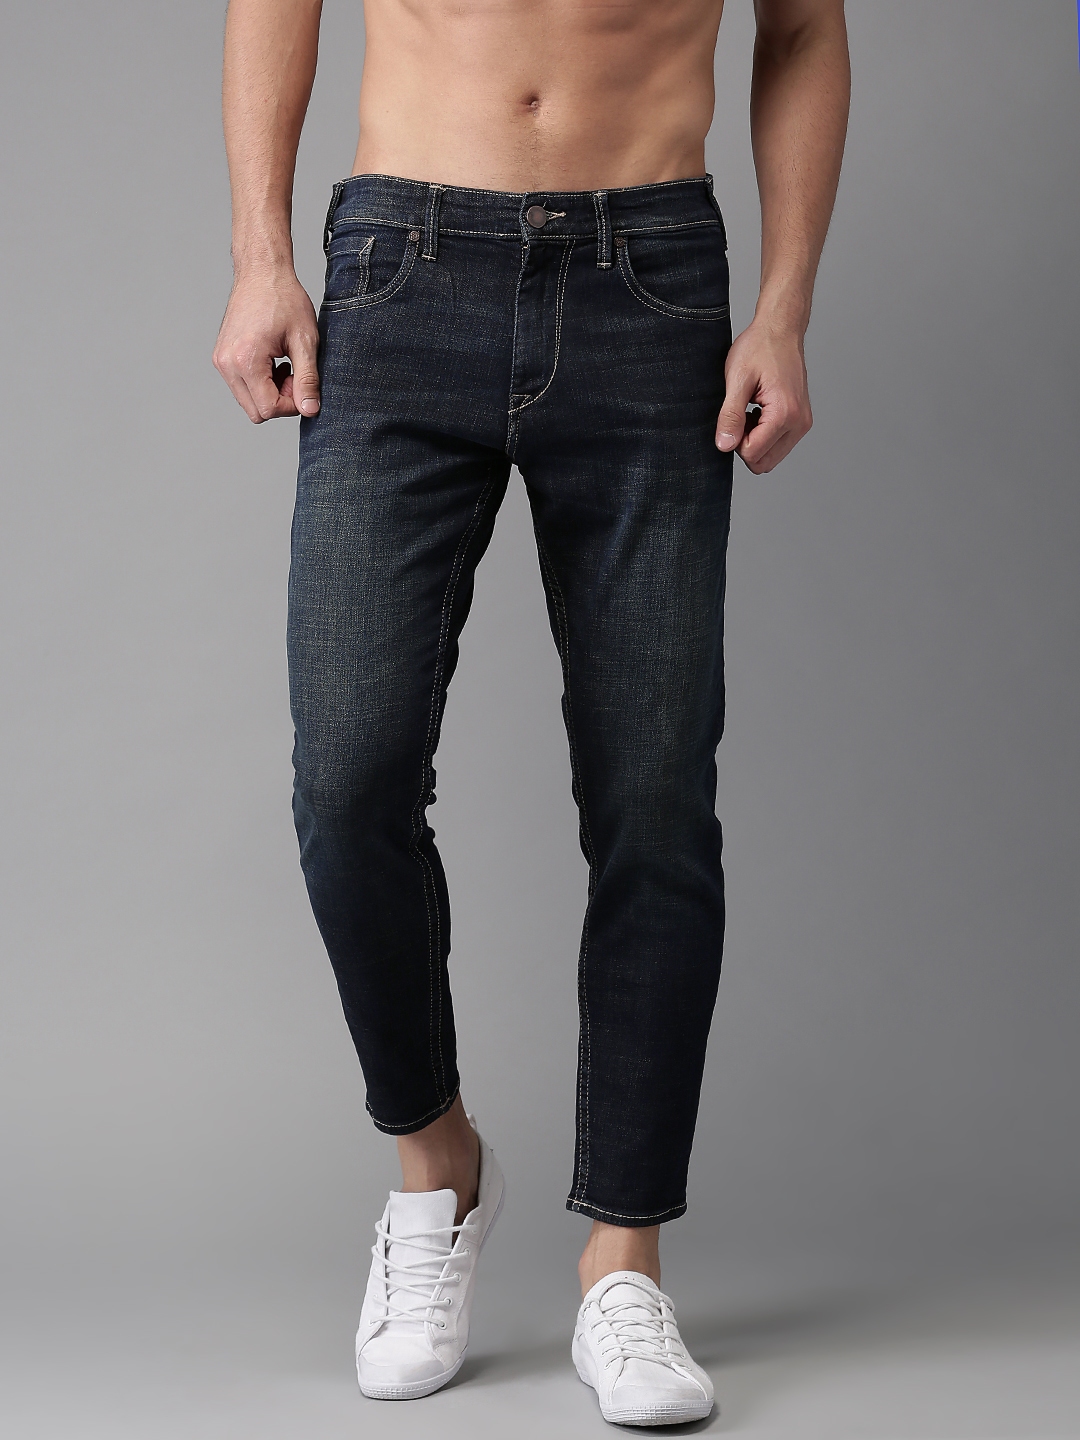 Moda Rapido Men Ankle Length Slim Fit Mid-Rise Blue Clean Look Jeans